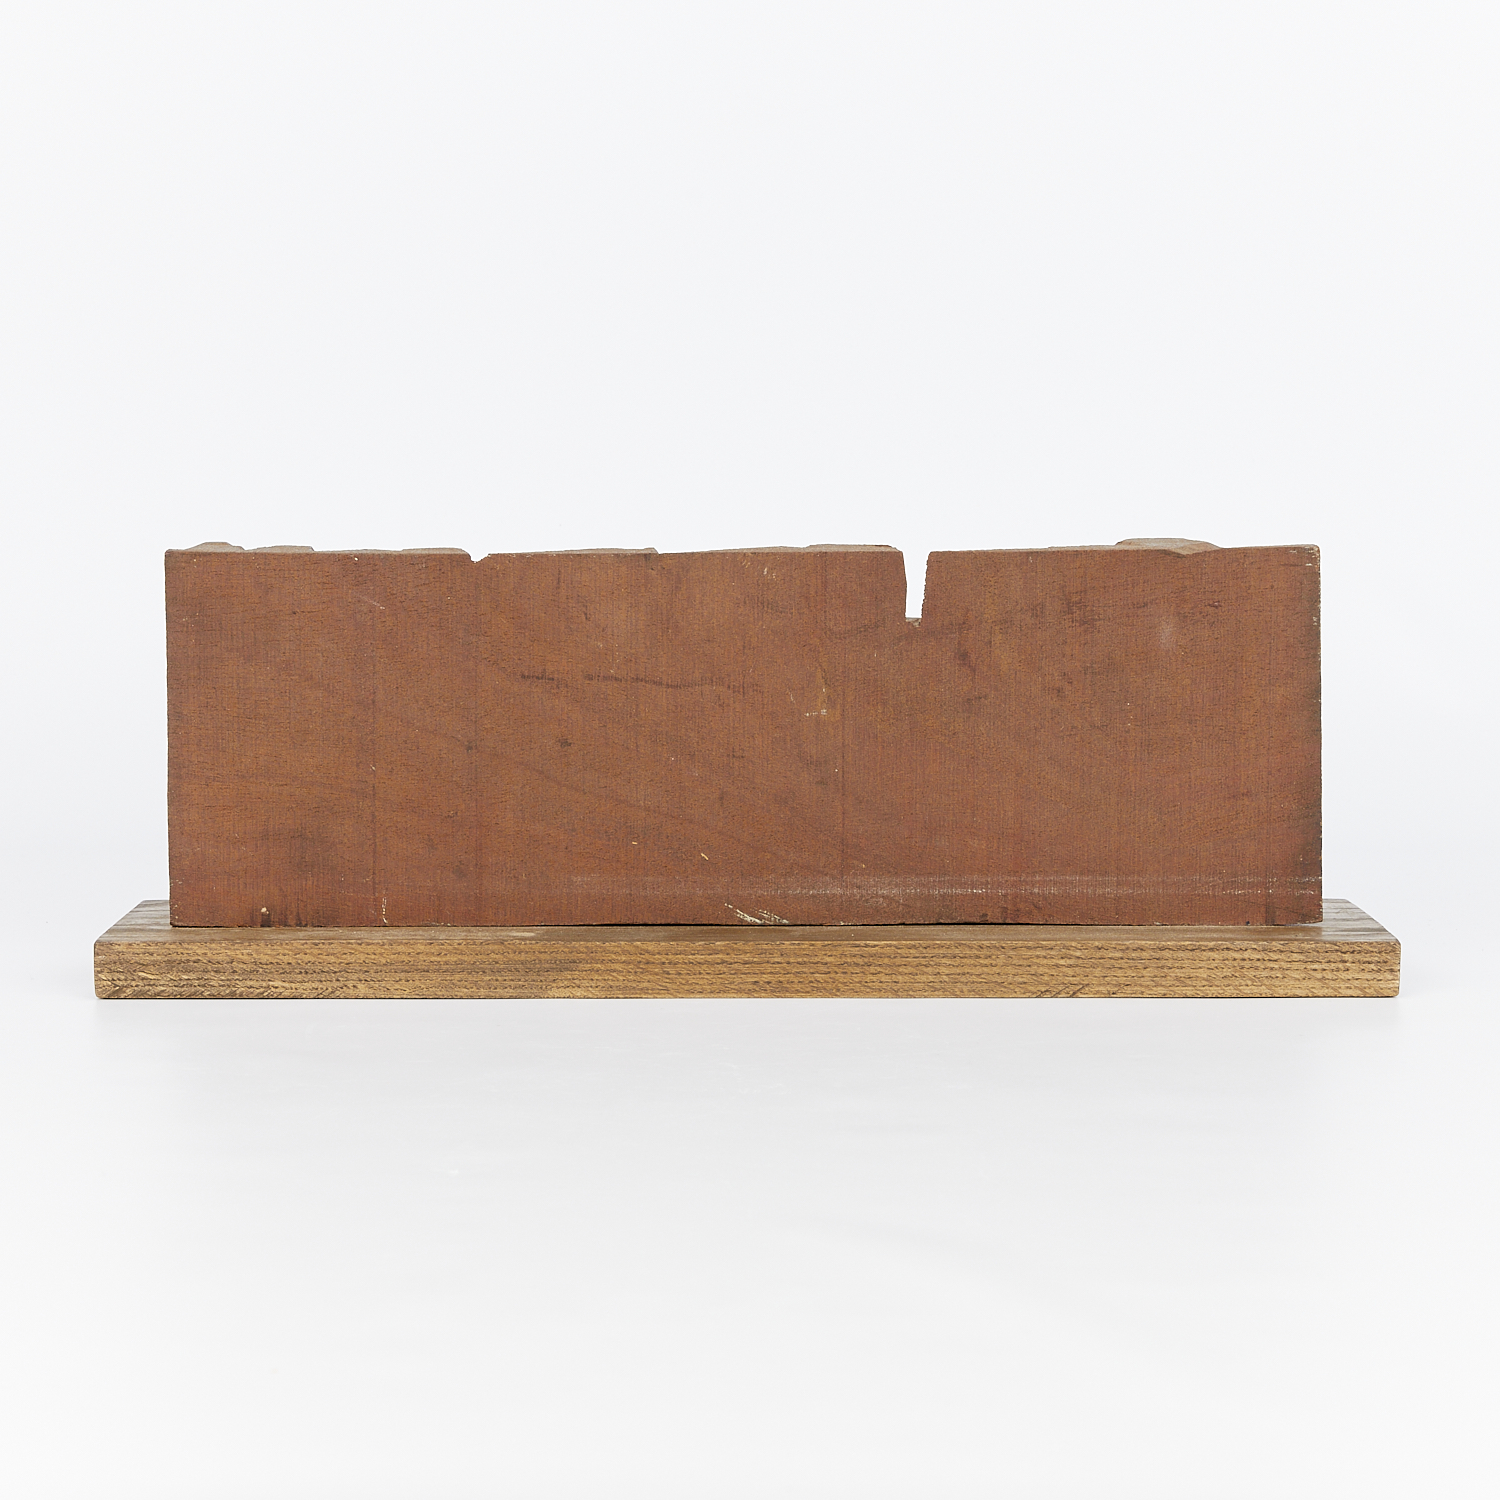 John Rood Carved Wooden Sculpture - Image 3 of 10